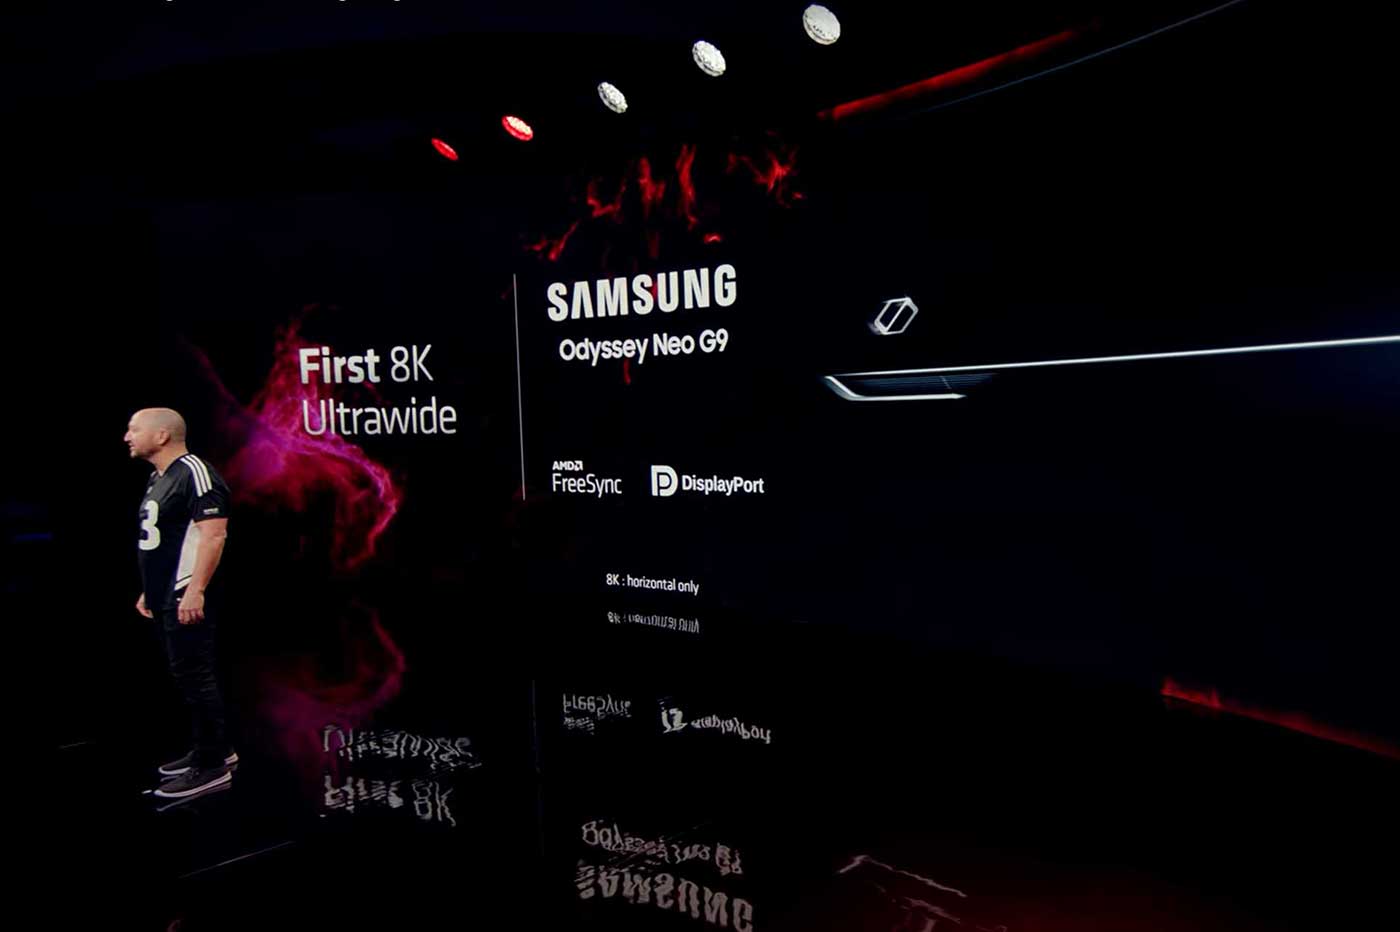 Samsung 8K Ultrawide